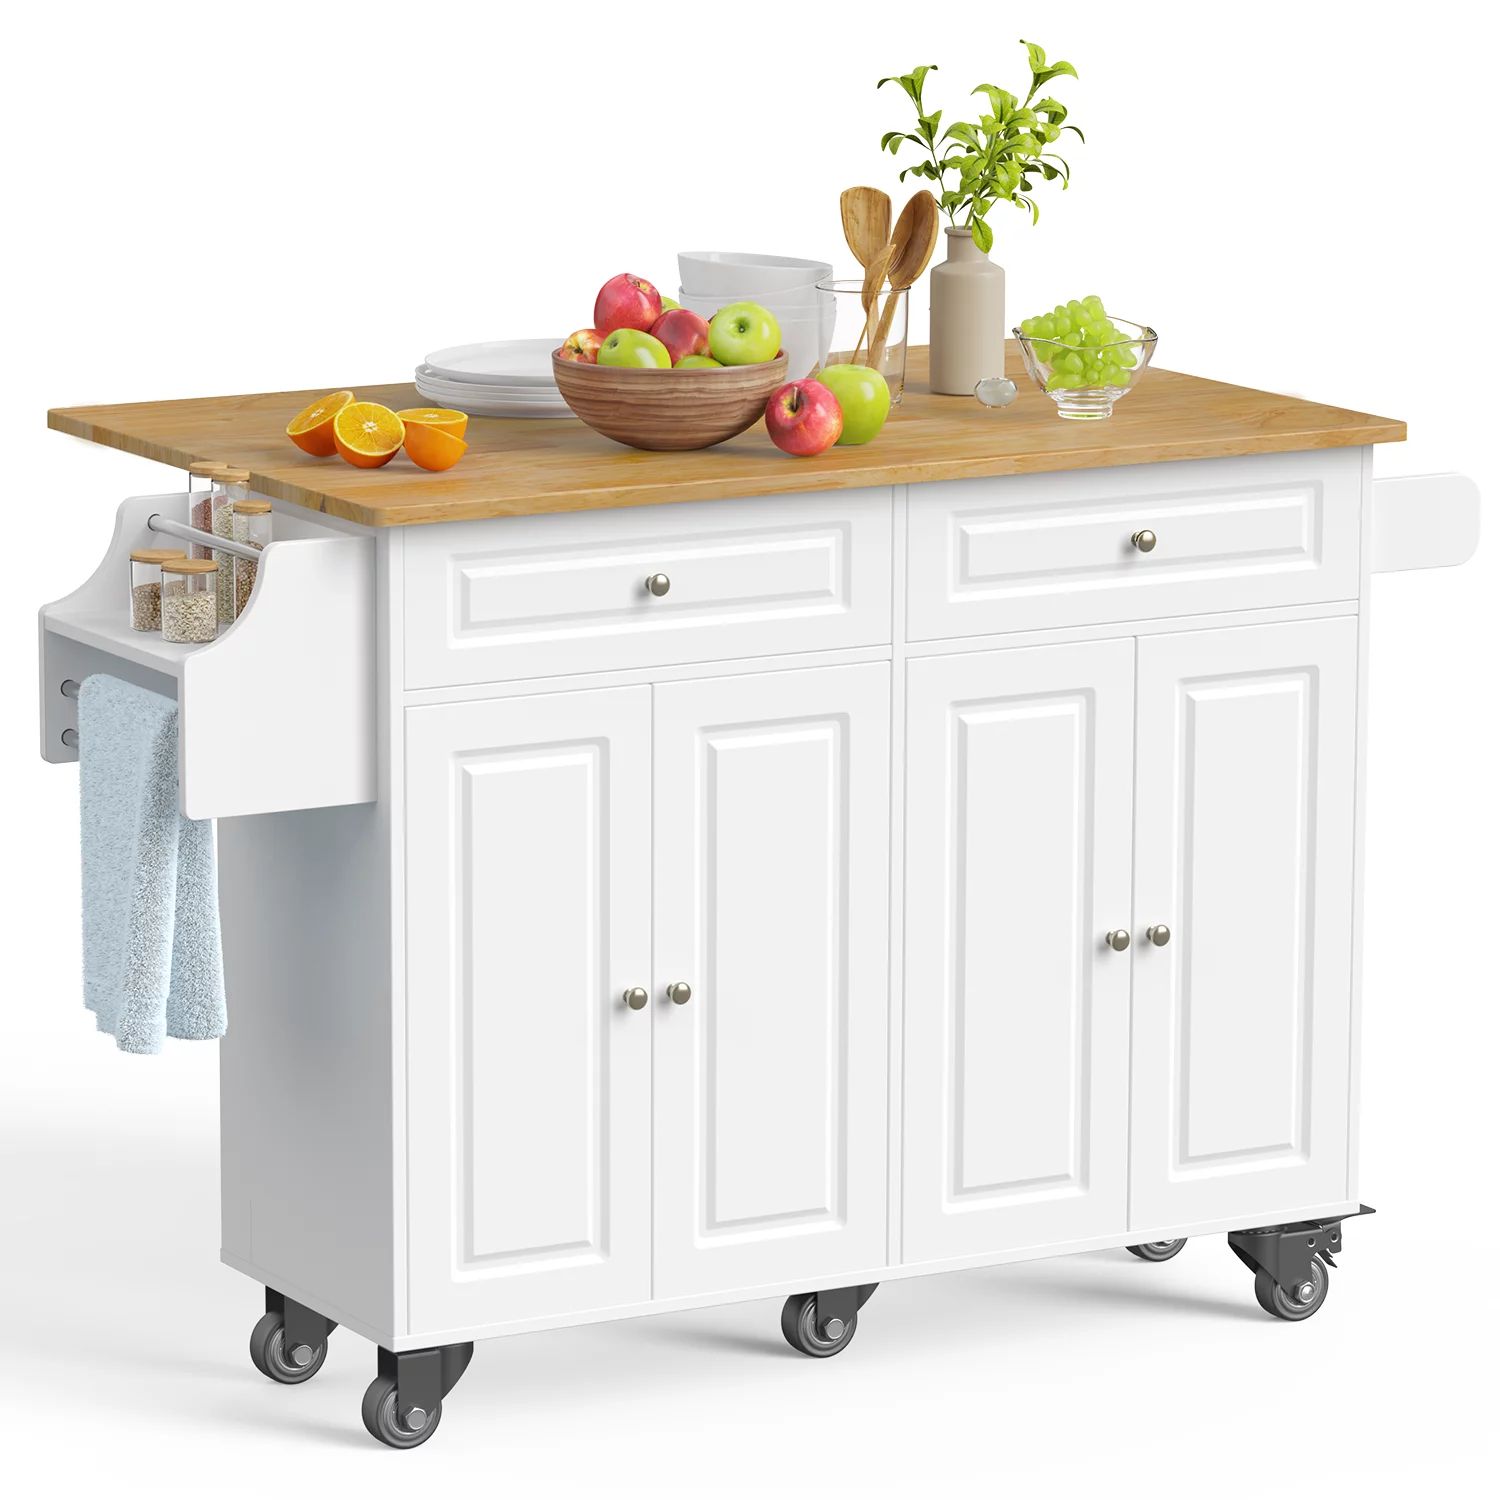 Bealife 52" Kitchen Island Carts with Storage on Wheels, White | Walmart (US)